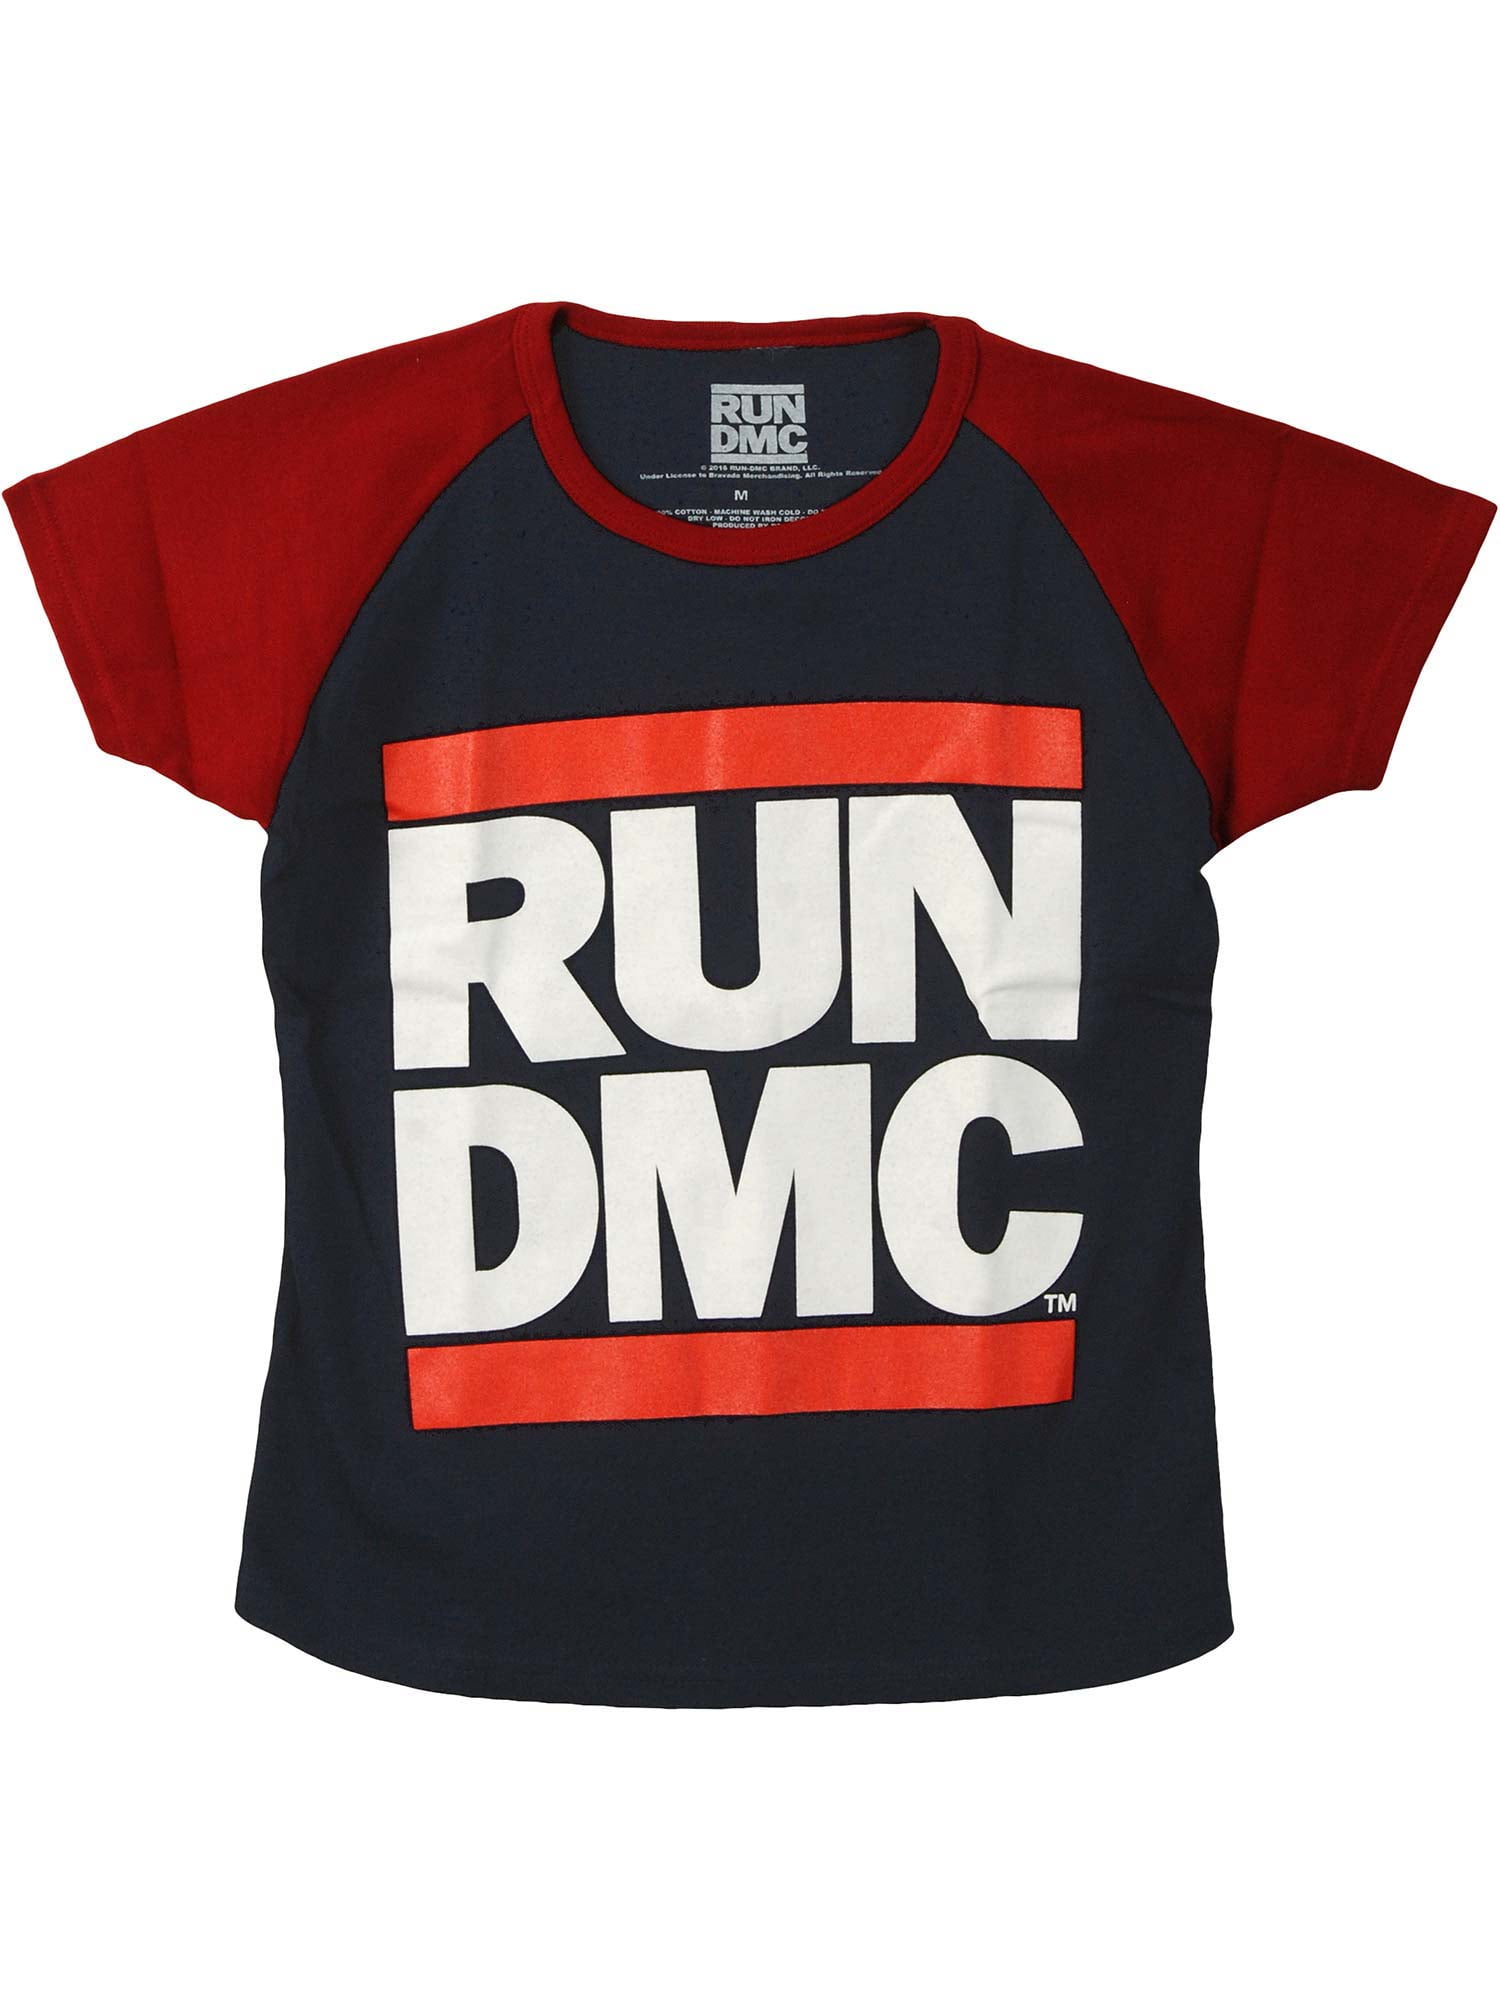 Run Dmc Run Dmc Logo Junior Top Red Navy Walmart Com Walmart Com